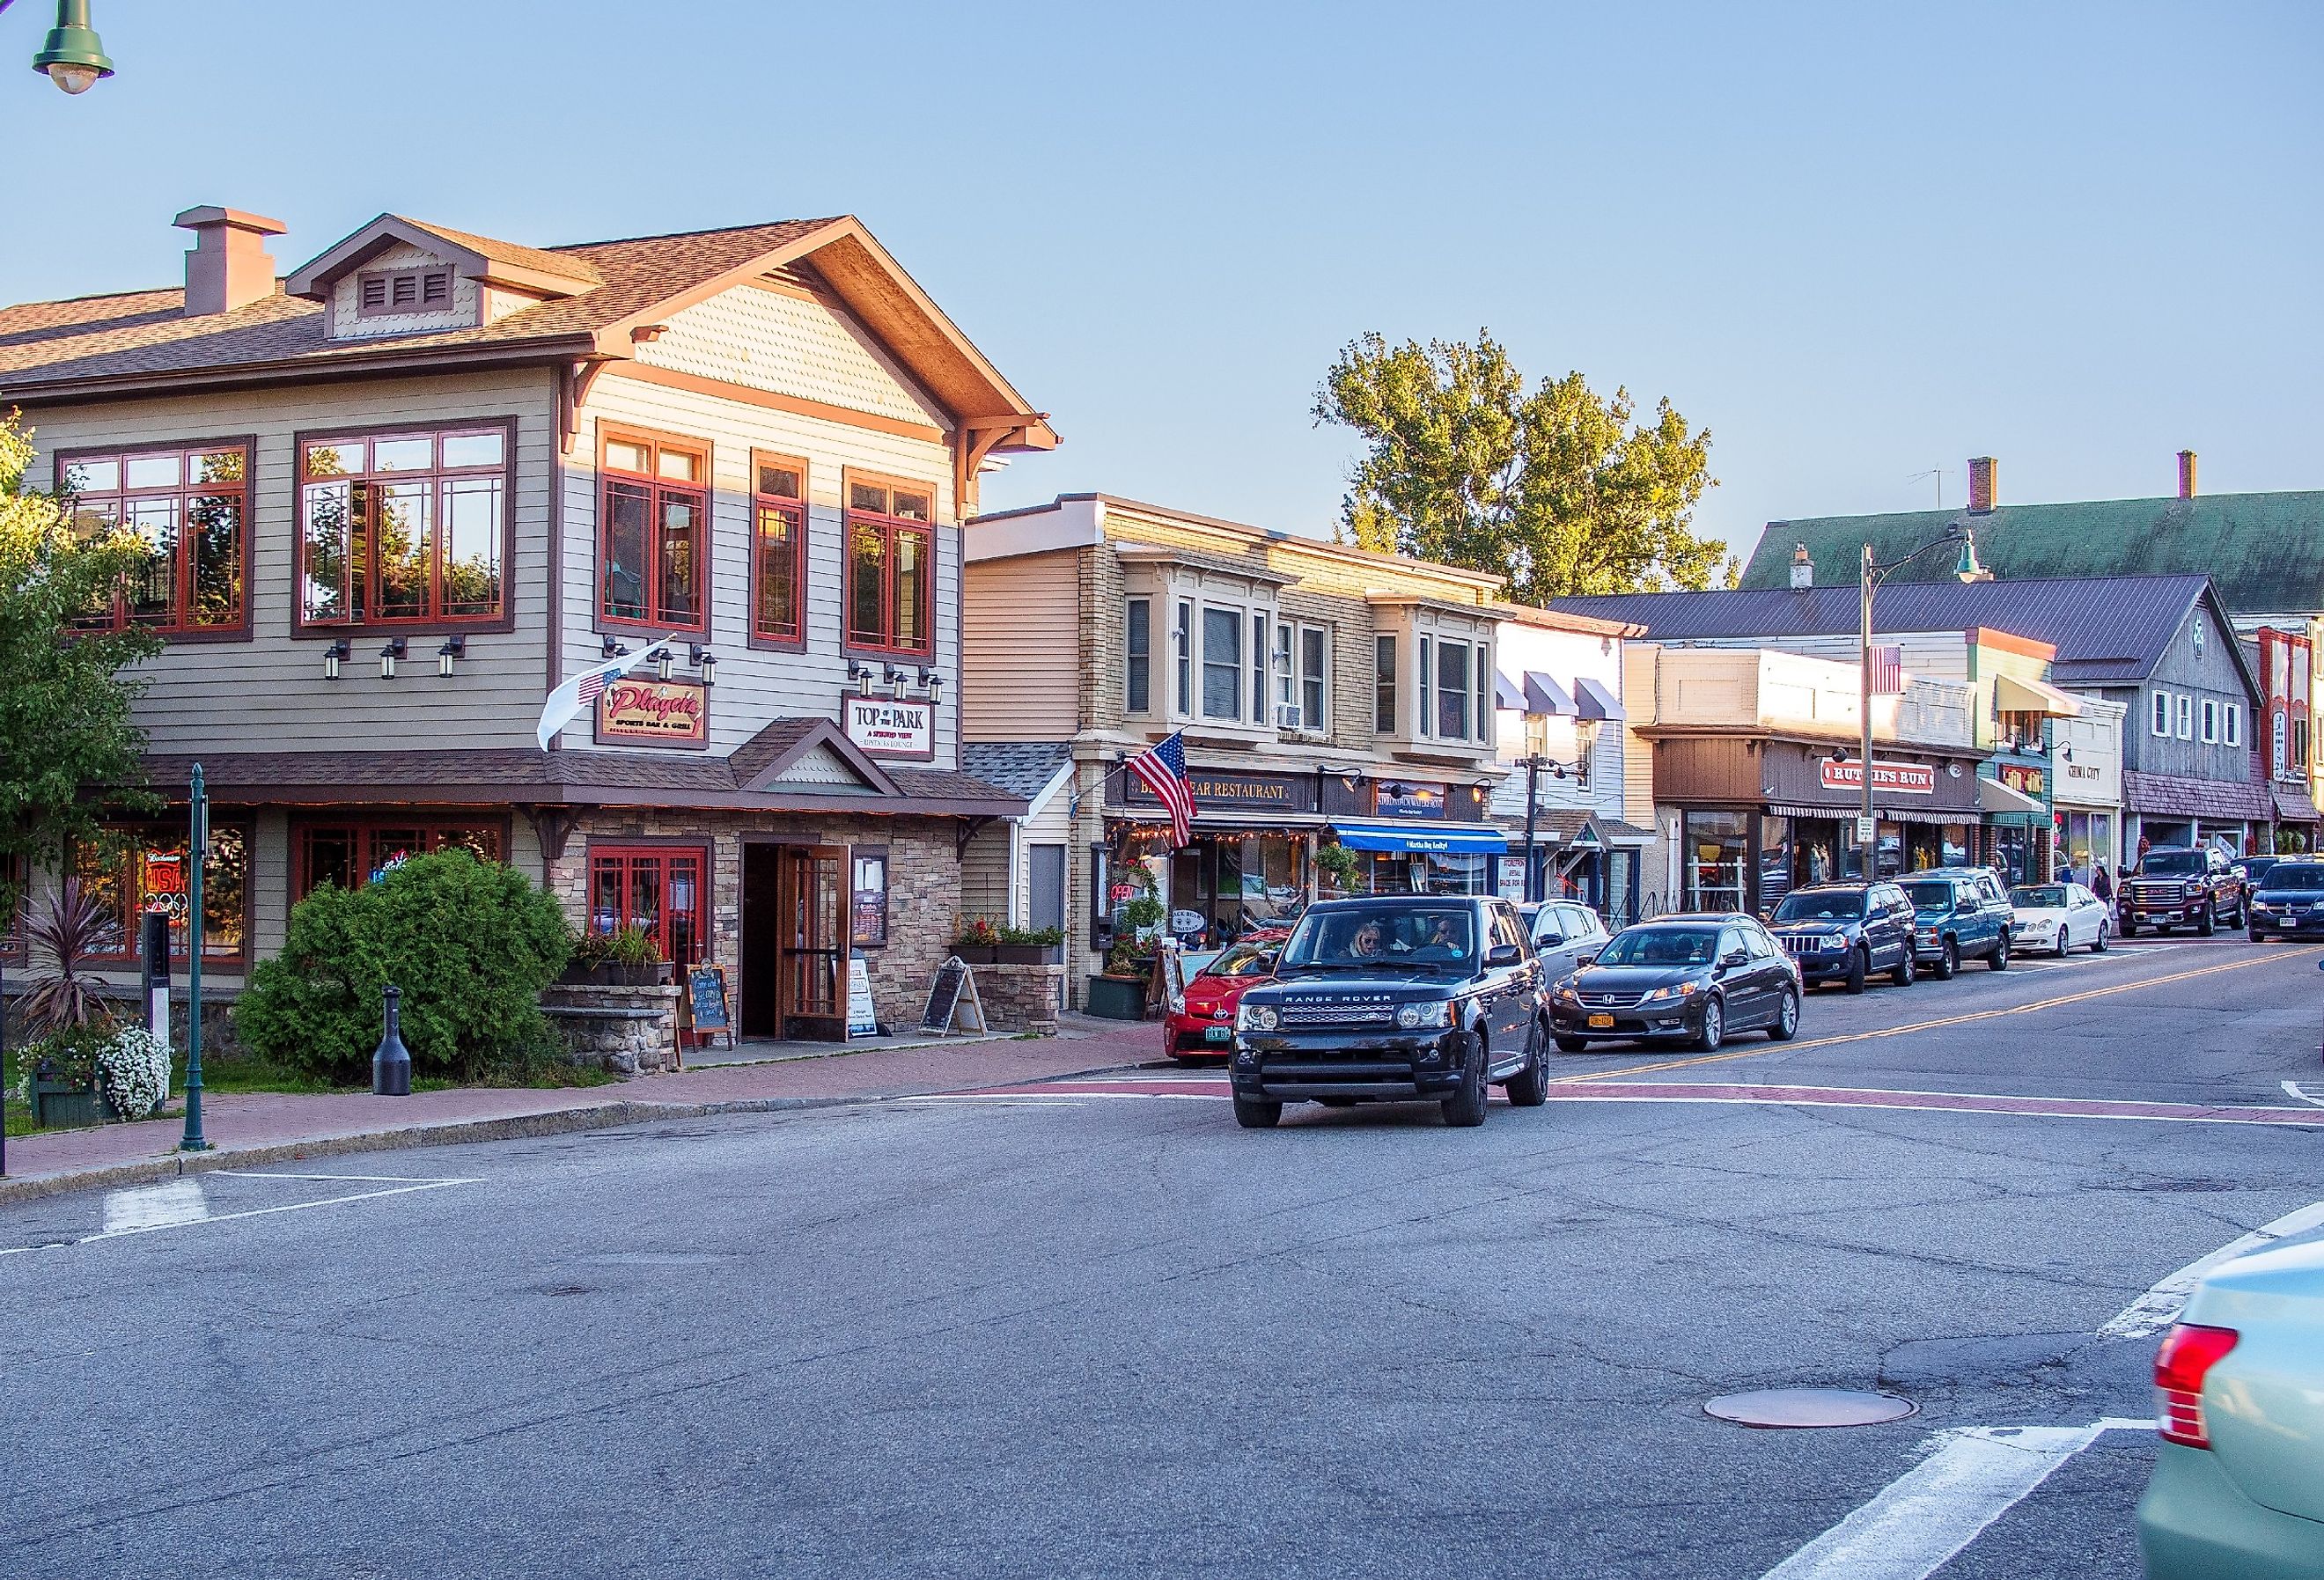 Main Street in Lake Placid, New York. Image credit Karlsson Photo via Shutterstock